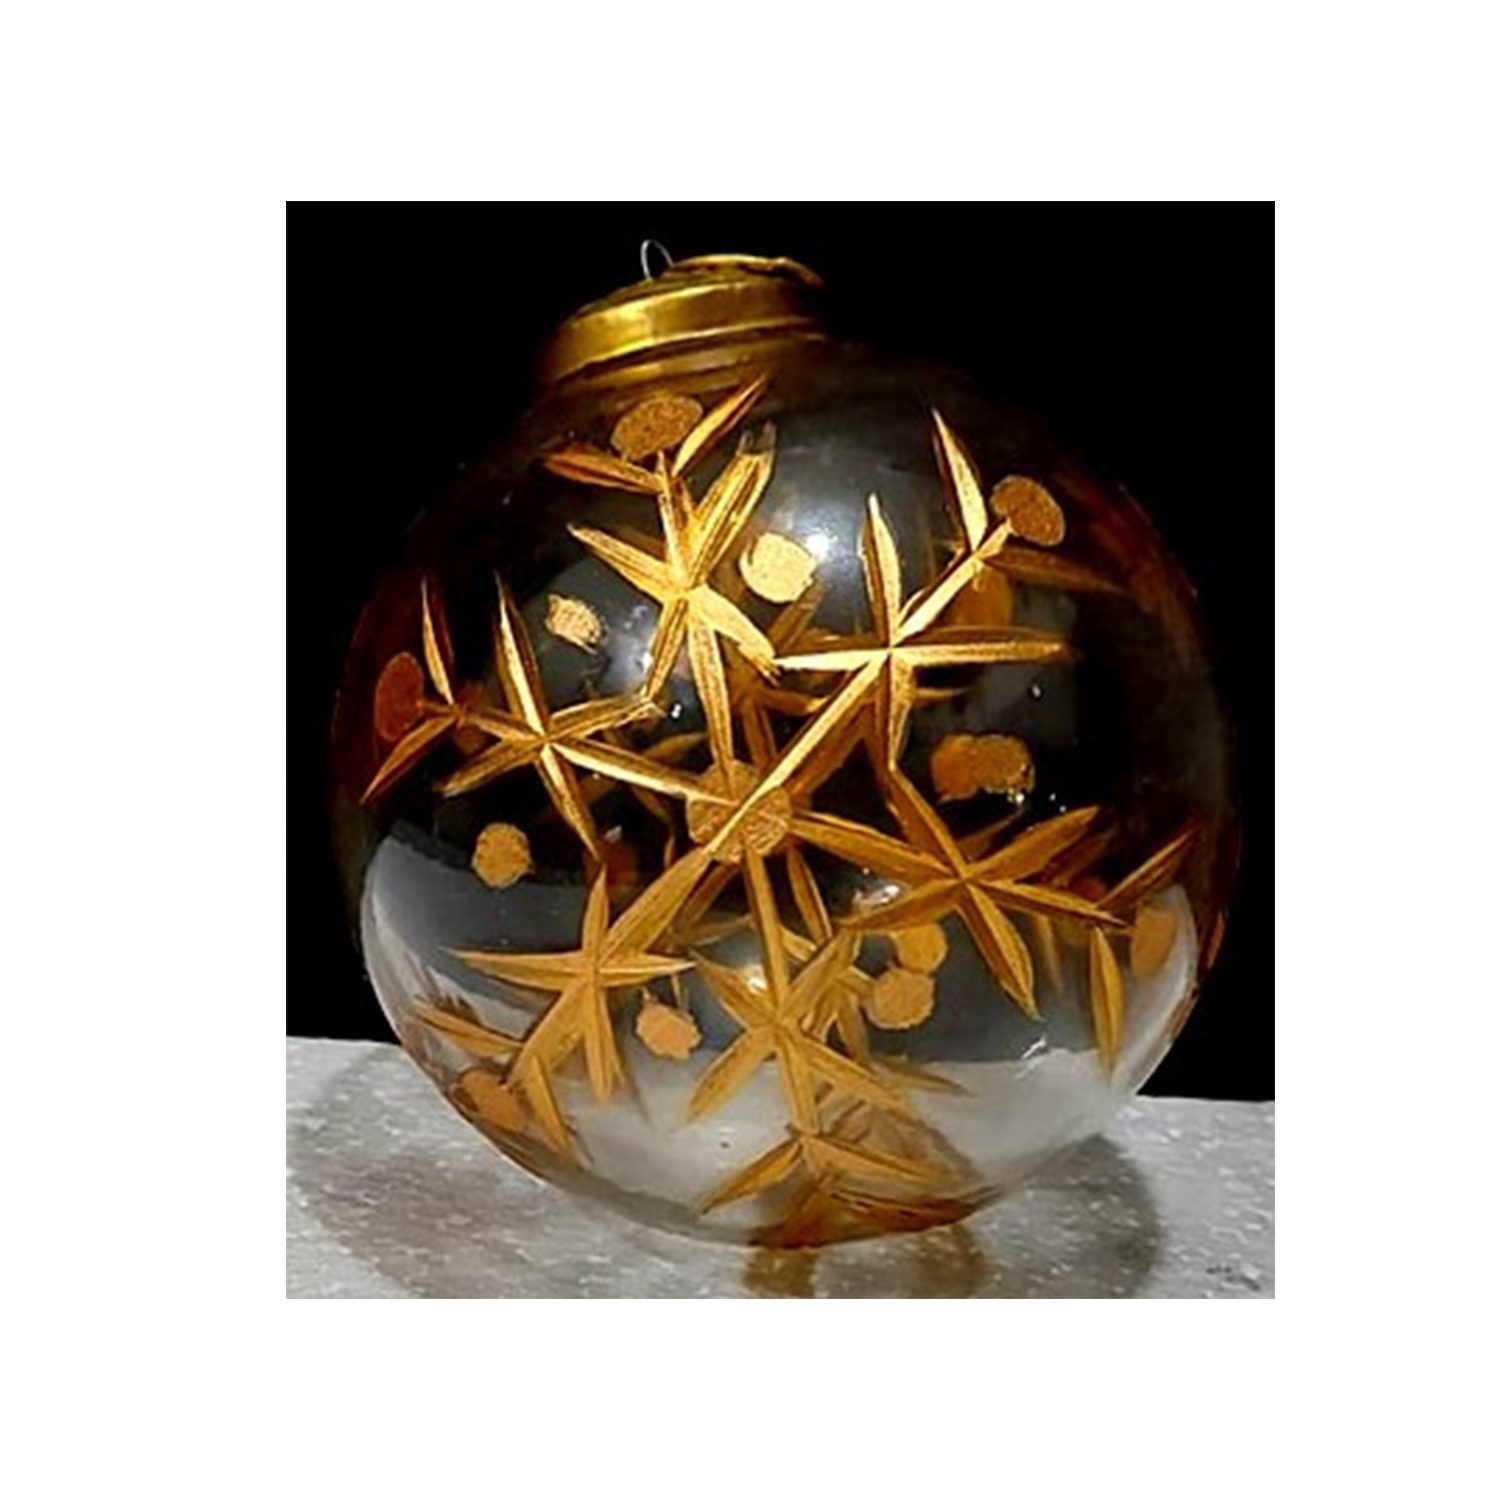 Jacinda Glass Ornament, Transparent with Gold